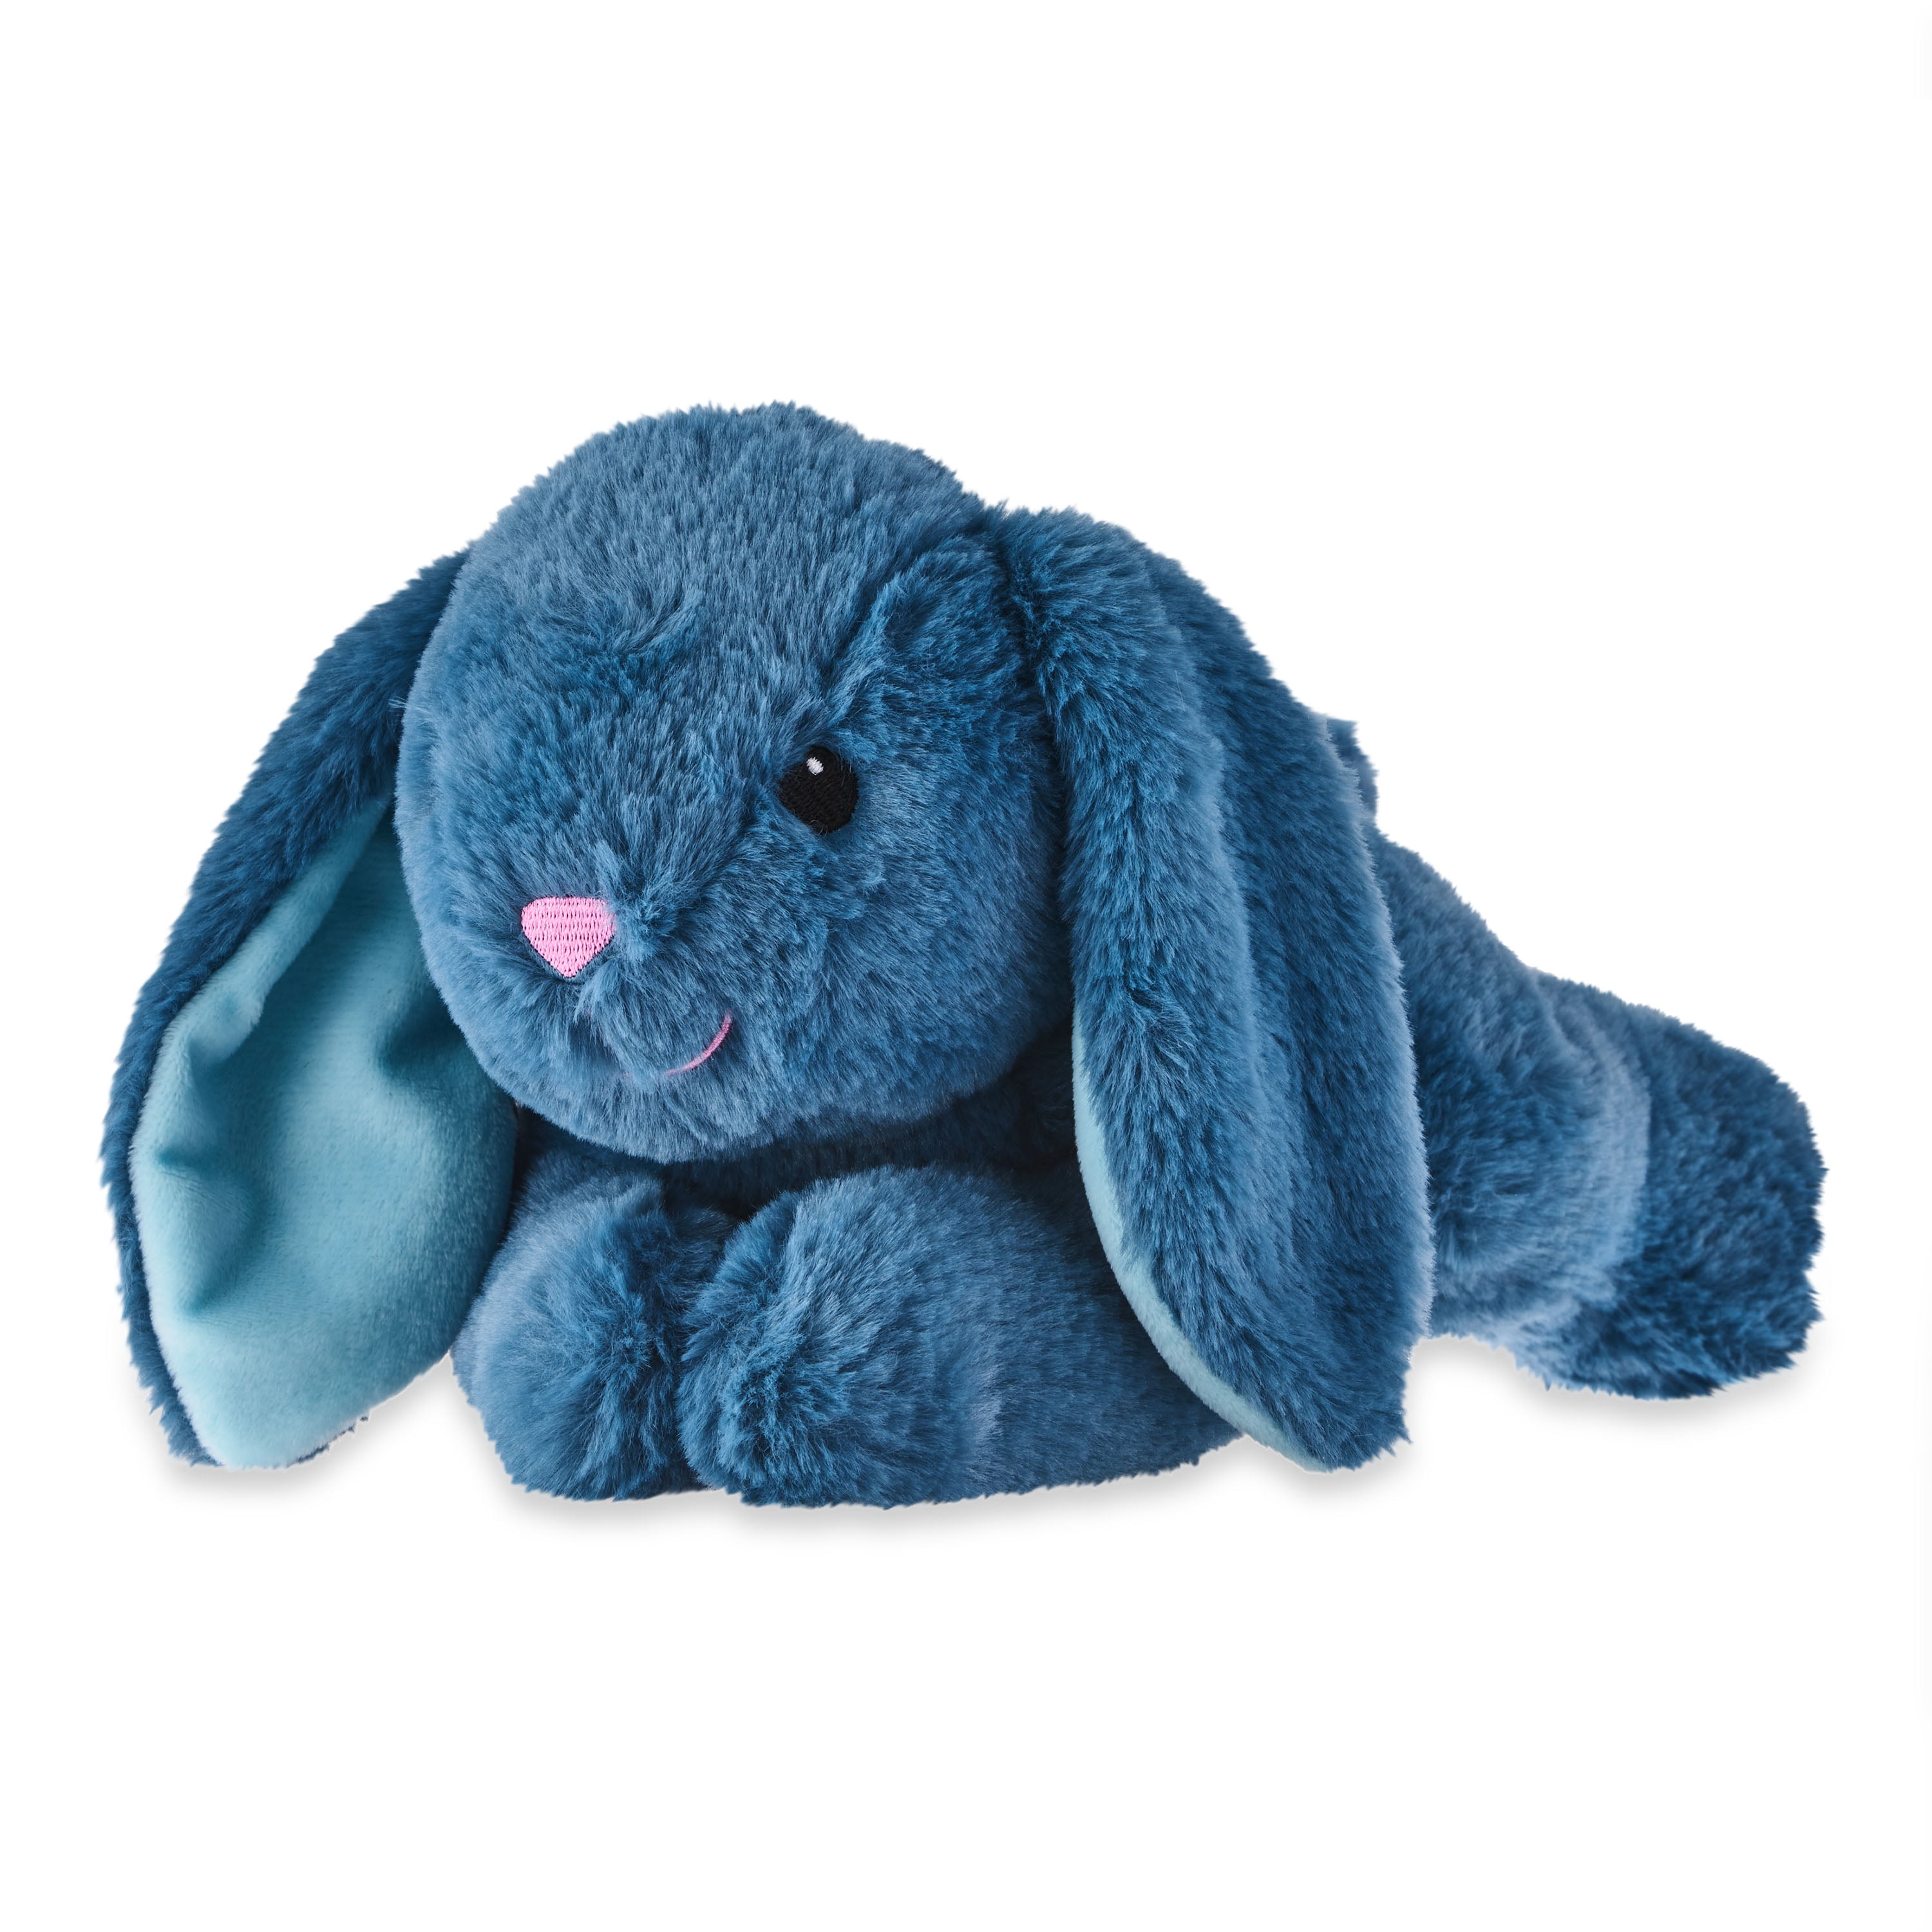 "Way to Celebrate! Easter Floppy Bunny Plush Toy, Blue"